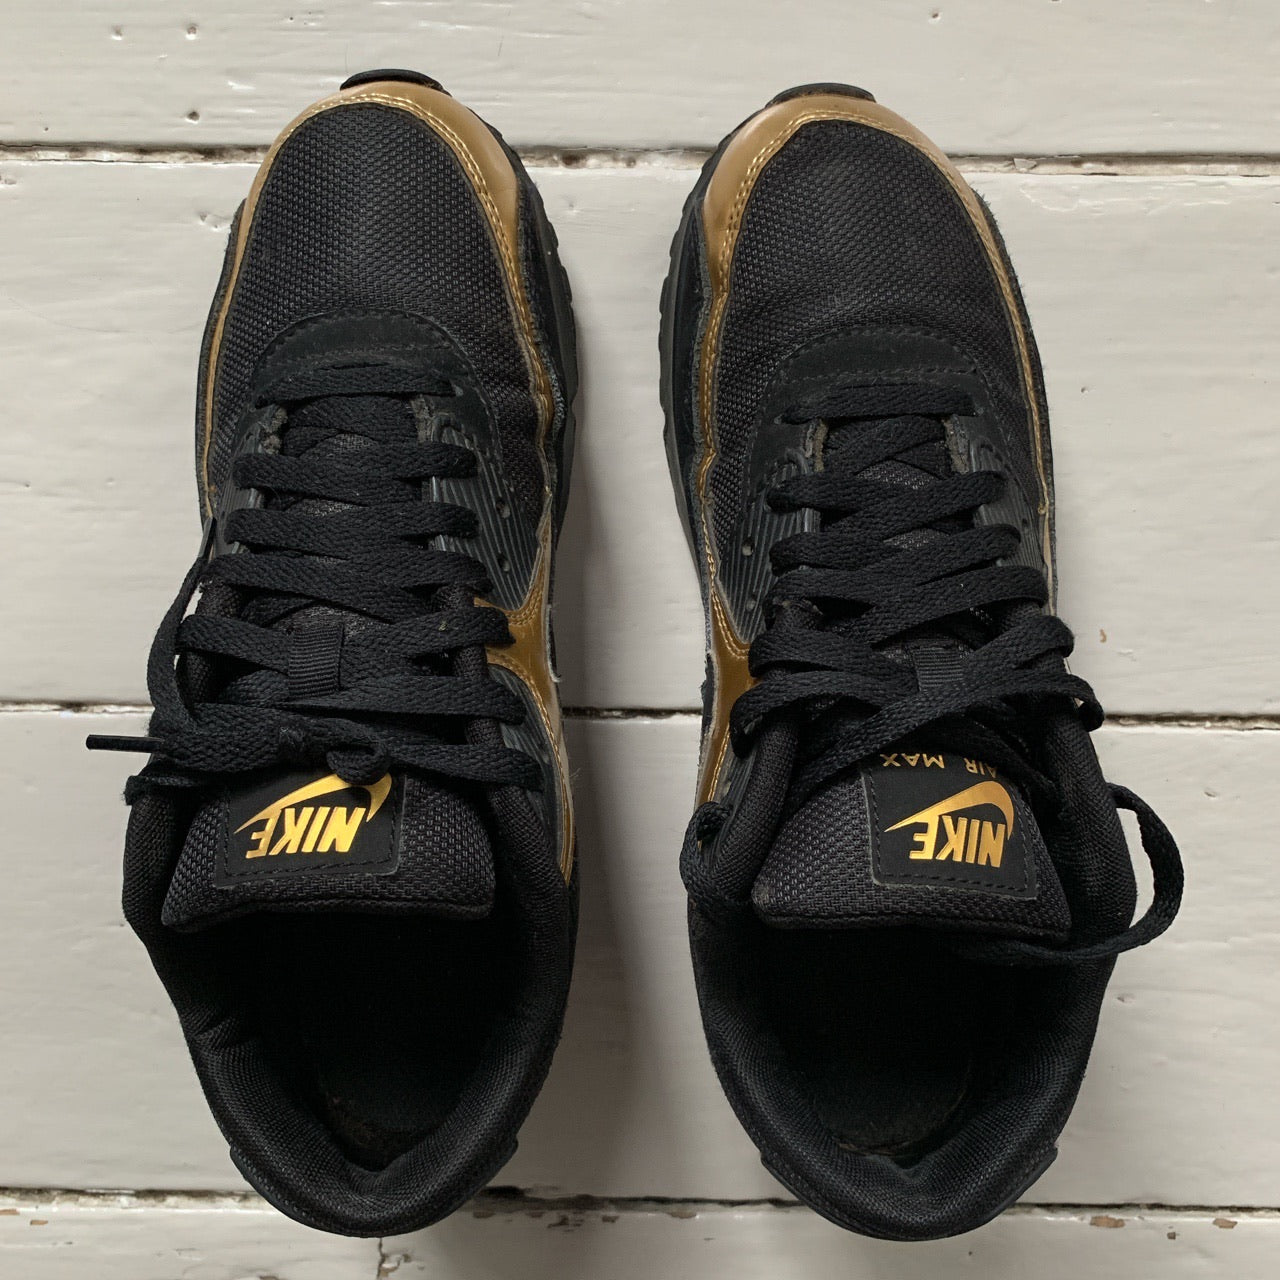 Nike Air Max 90 Black and Gold (UK 8)